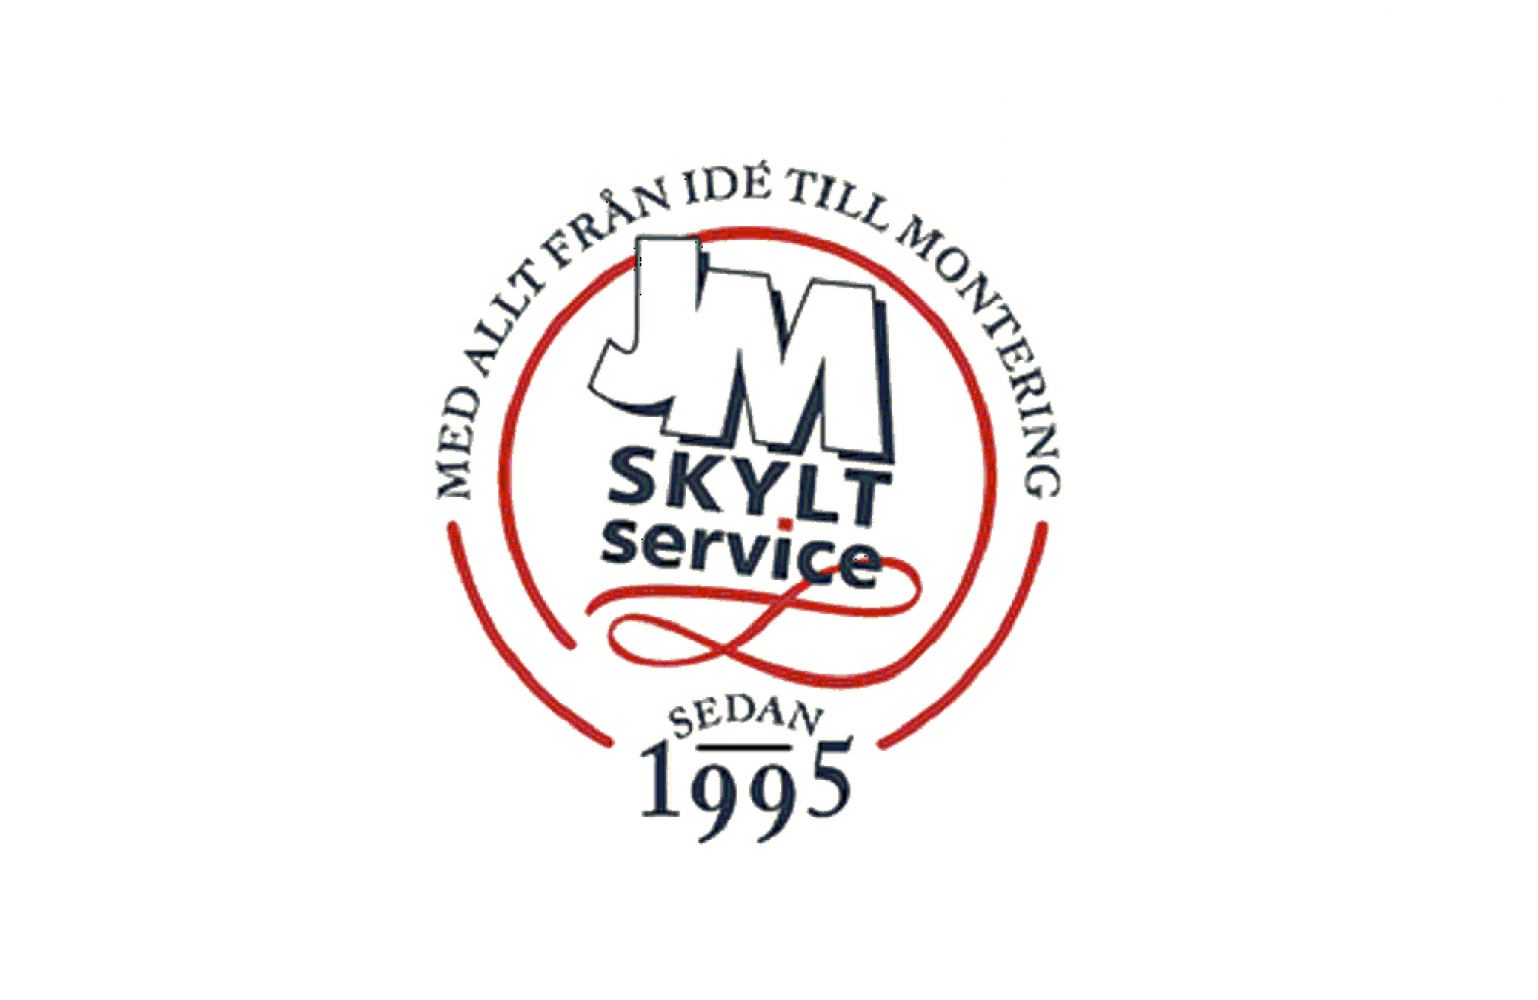 JM Skylt Service 